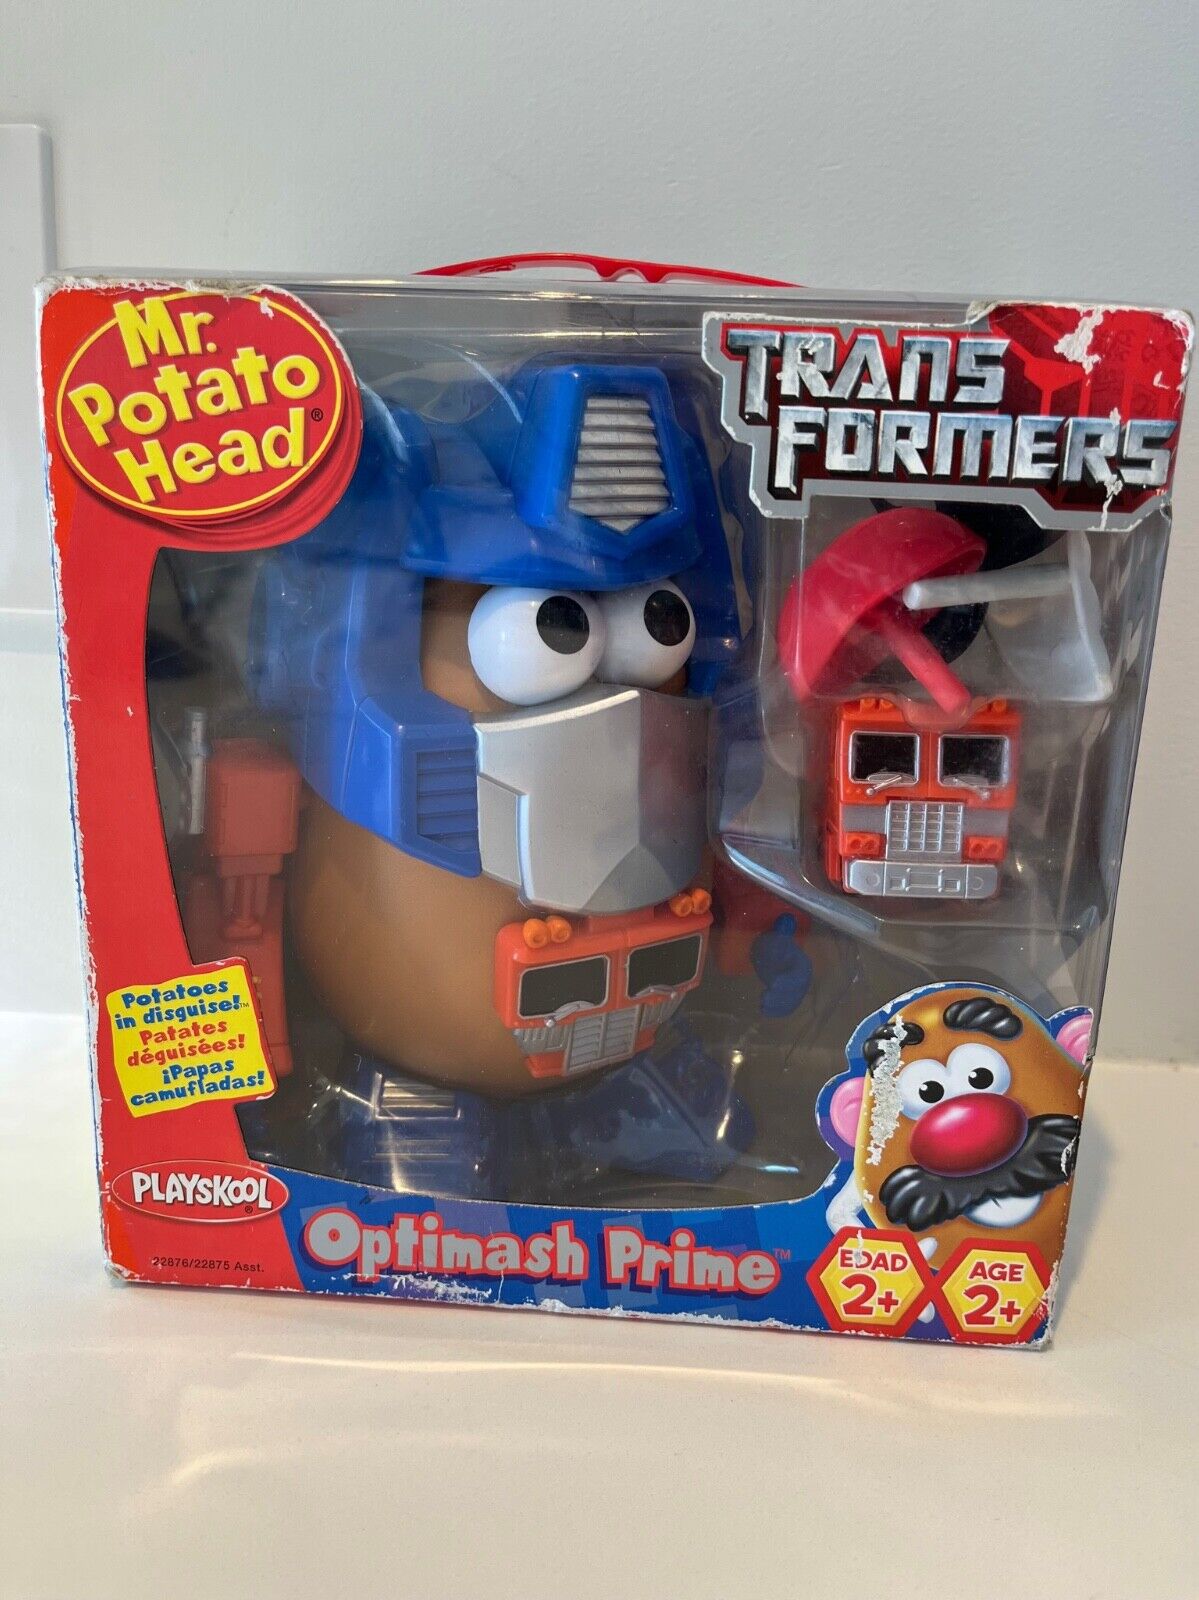 Playskool Mr. Potato Head Optimash-Prime Optimus Prime Transformer